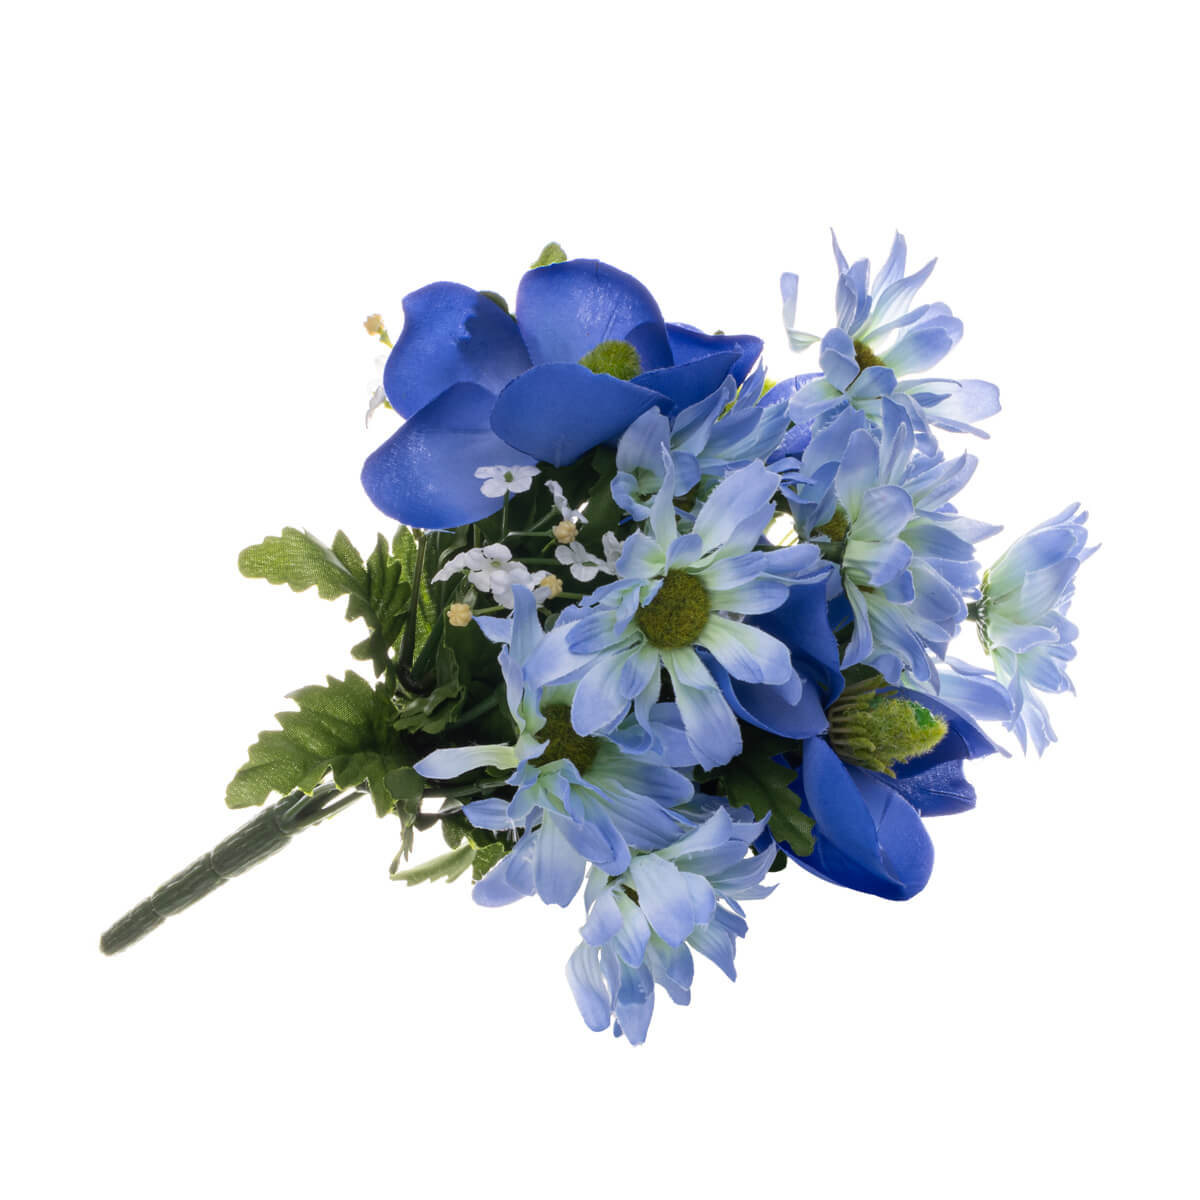 Neat blue bouquet